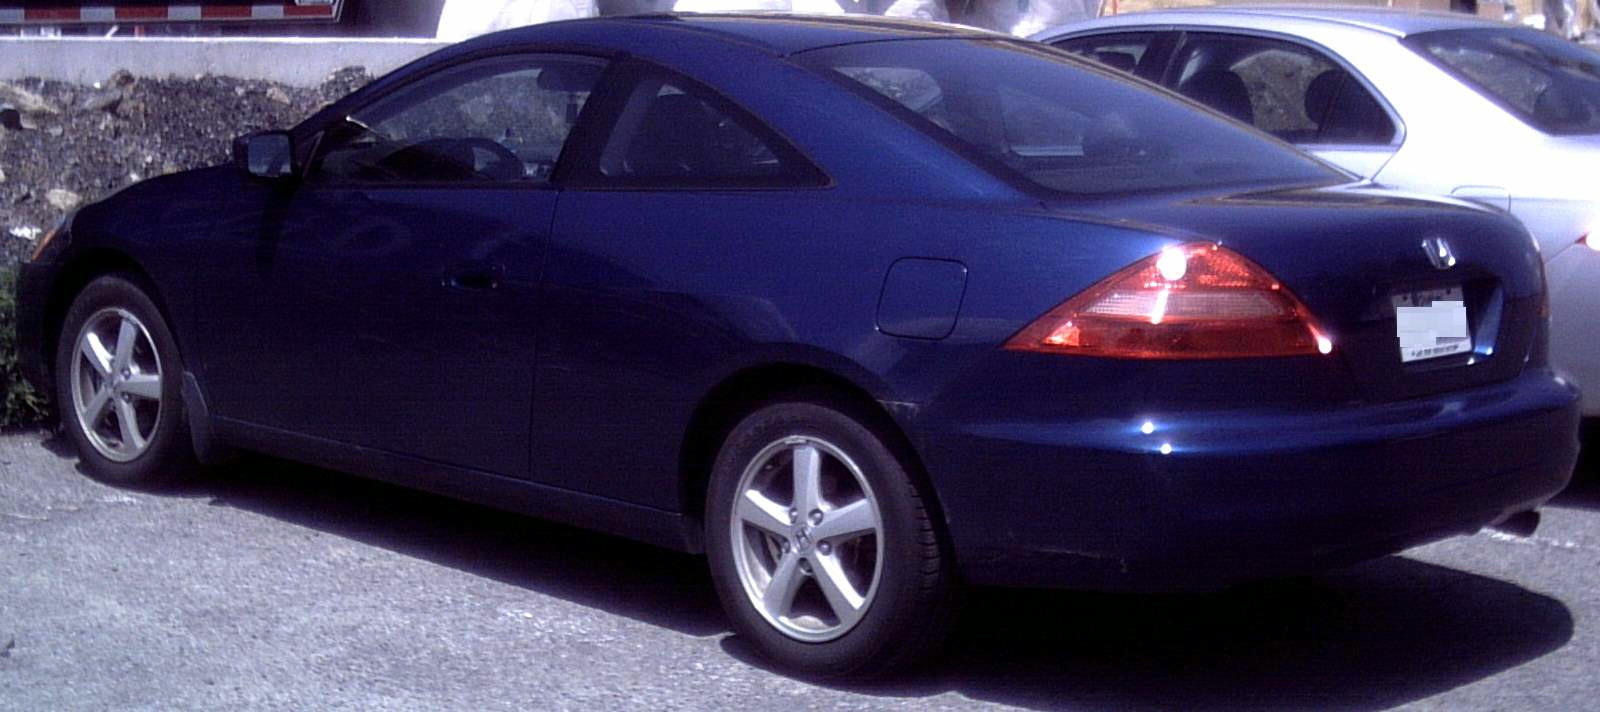 2003 honda accord ex manual coupe